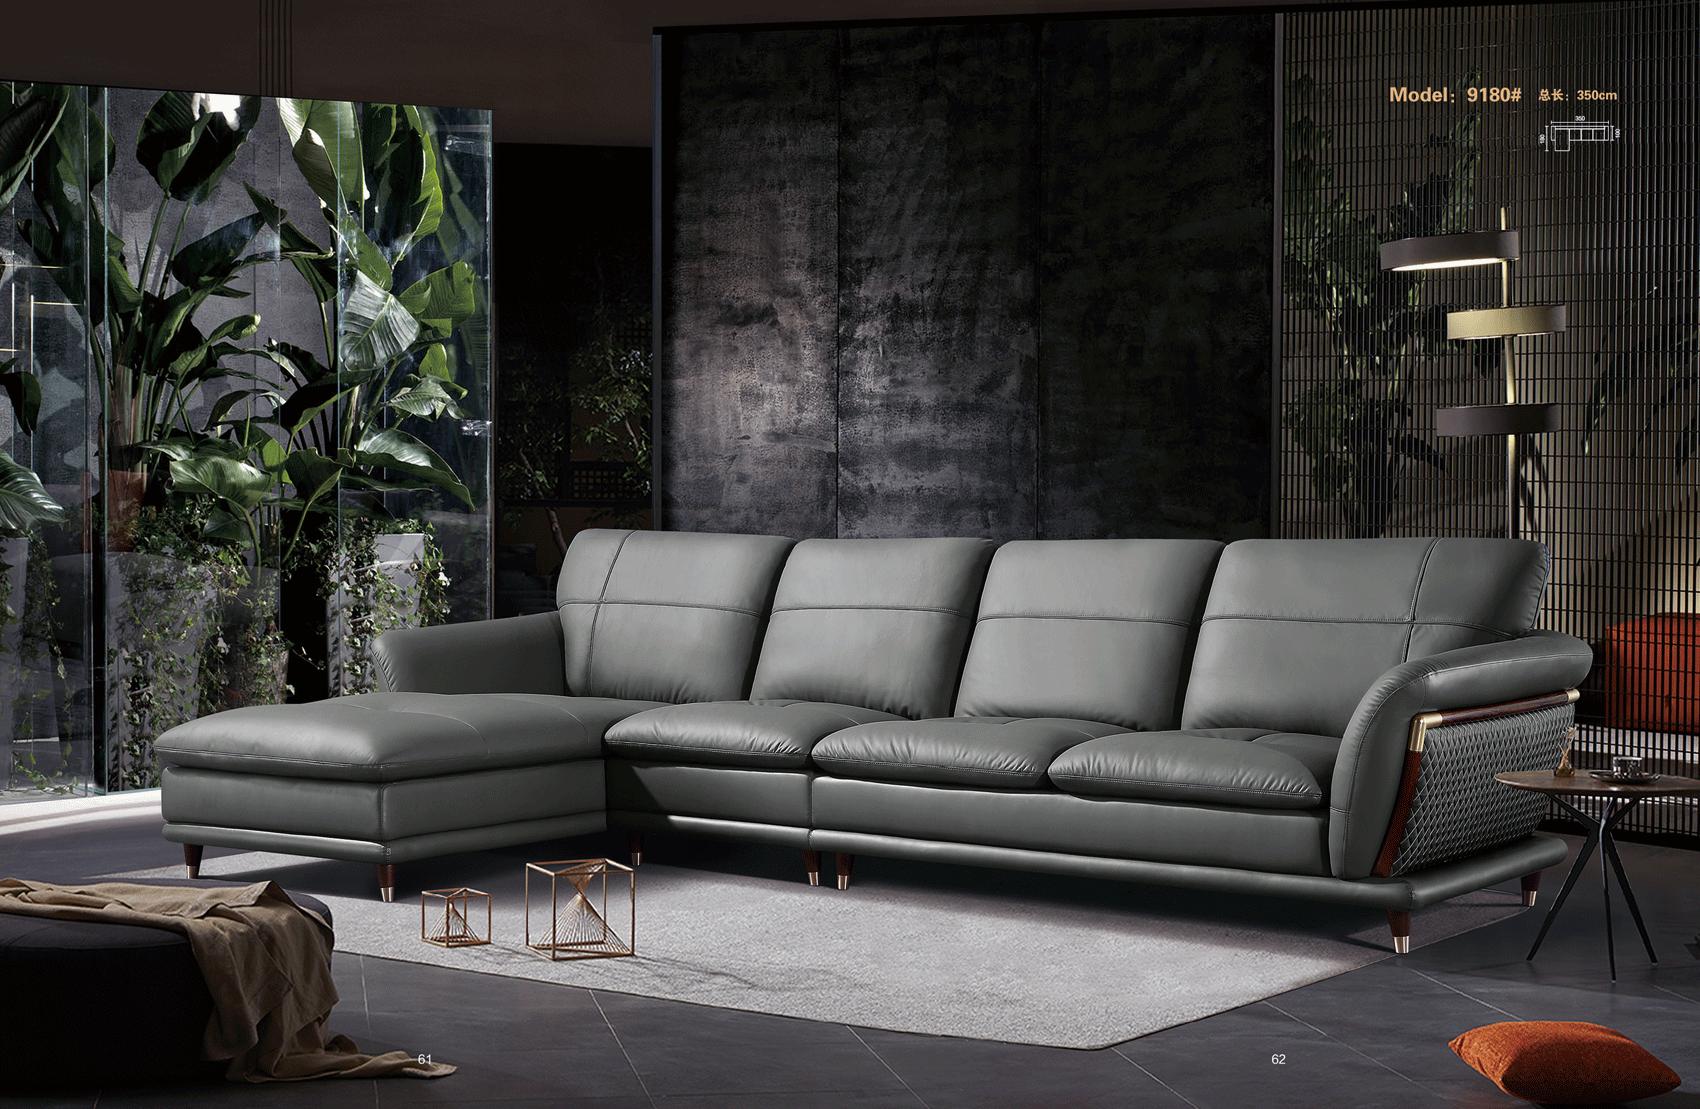 

    
Dark Grey Top-grain Leather Sectional Sofa Contemporary ESF 9180
